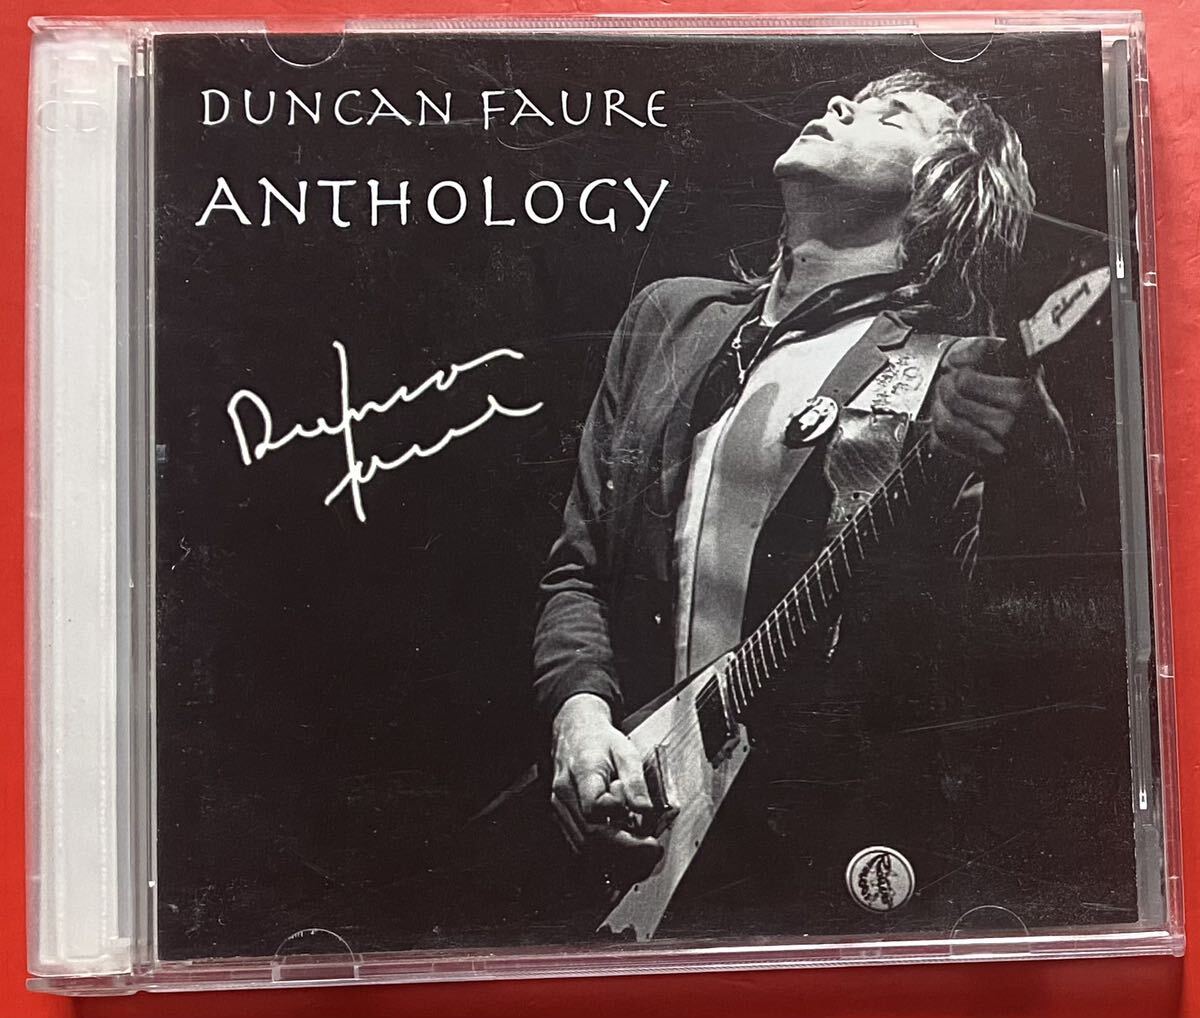 【2CD】Duncan Faure「Anthology」ダンカン・フォール 輸入盤 盤面良好 [04260100]_画像1